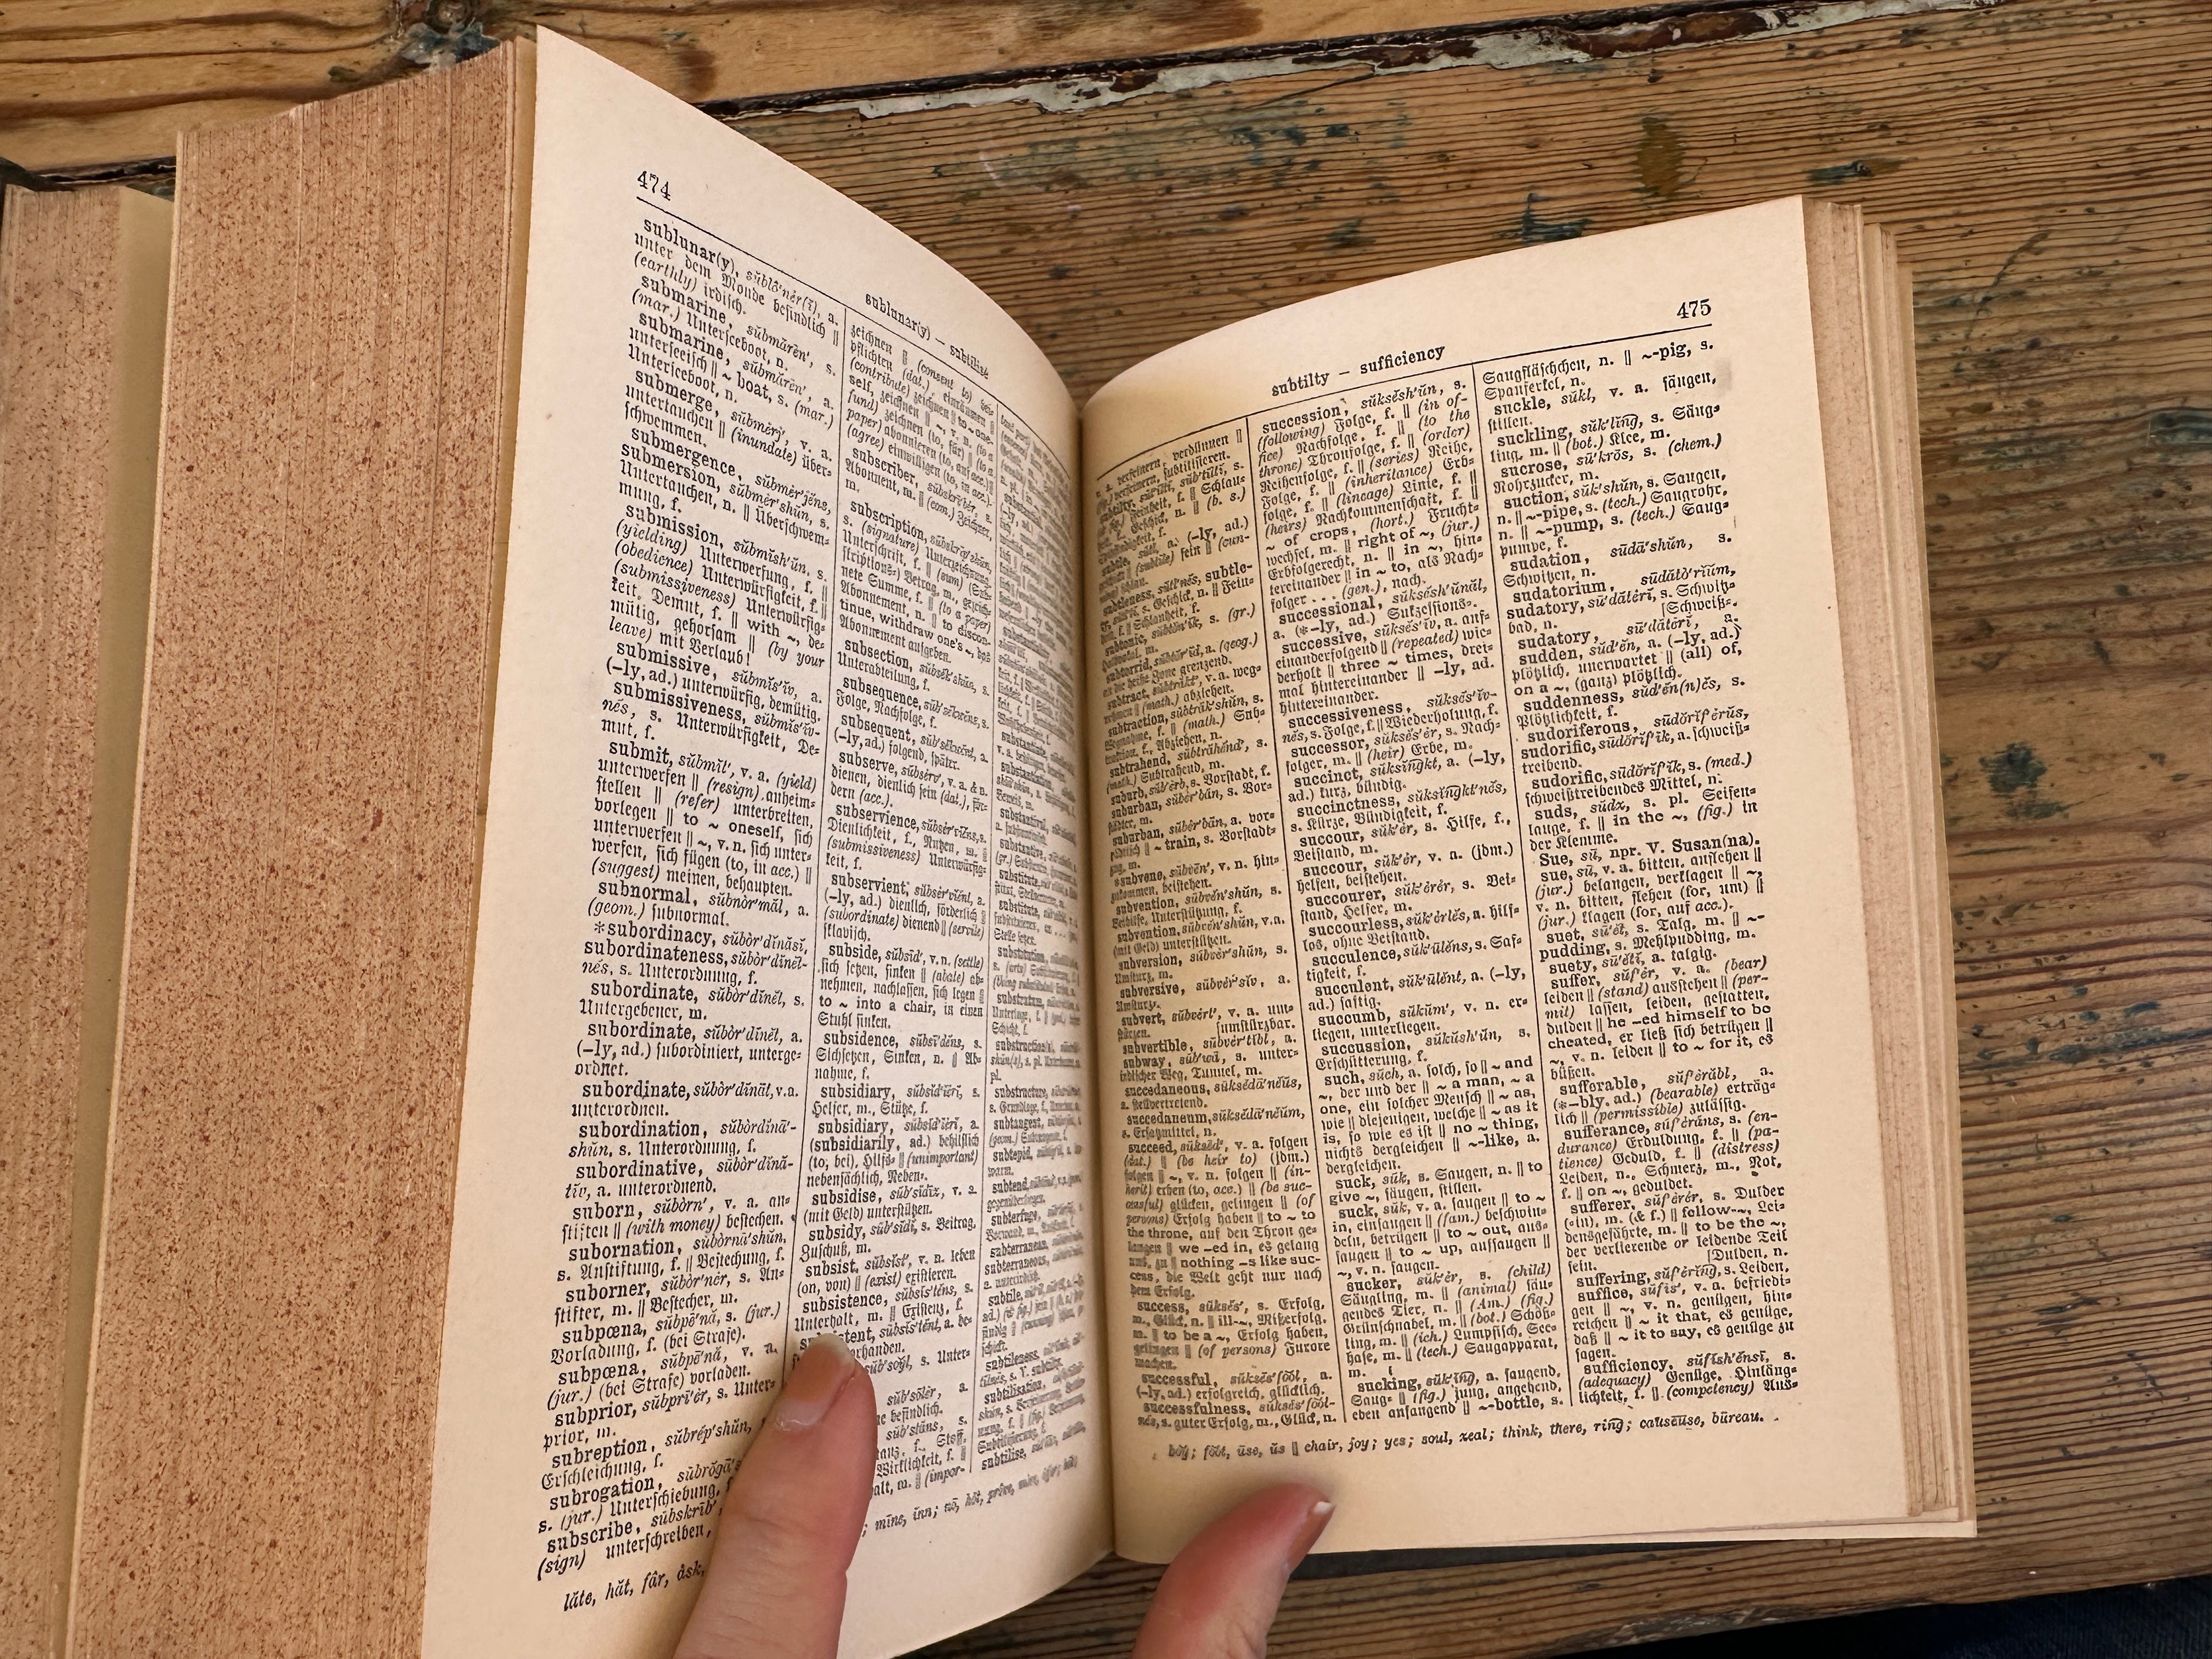 1916 James German and English Dictionary